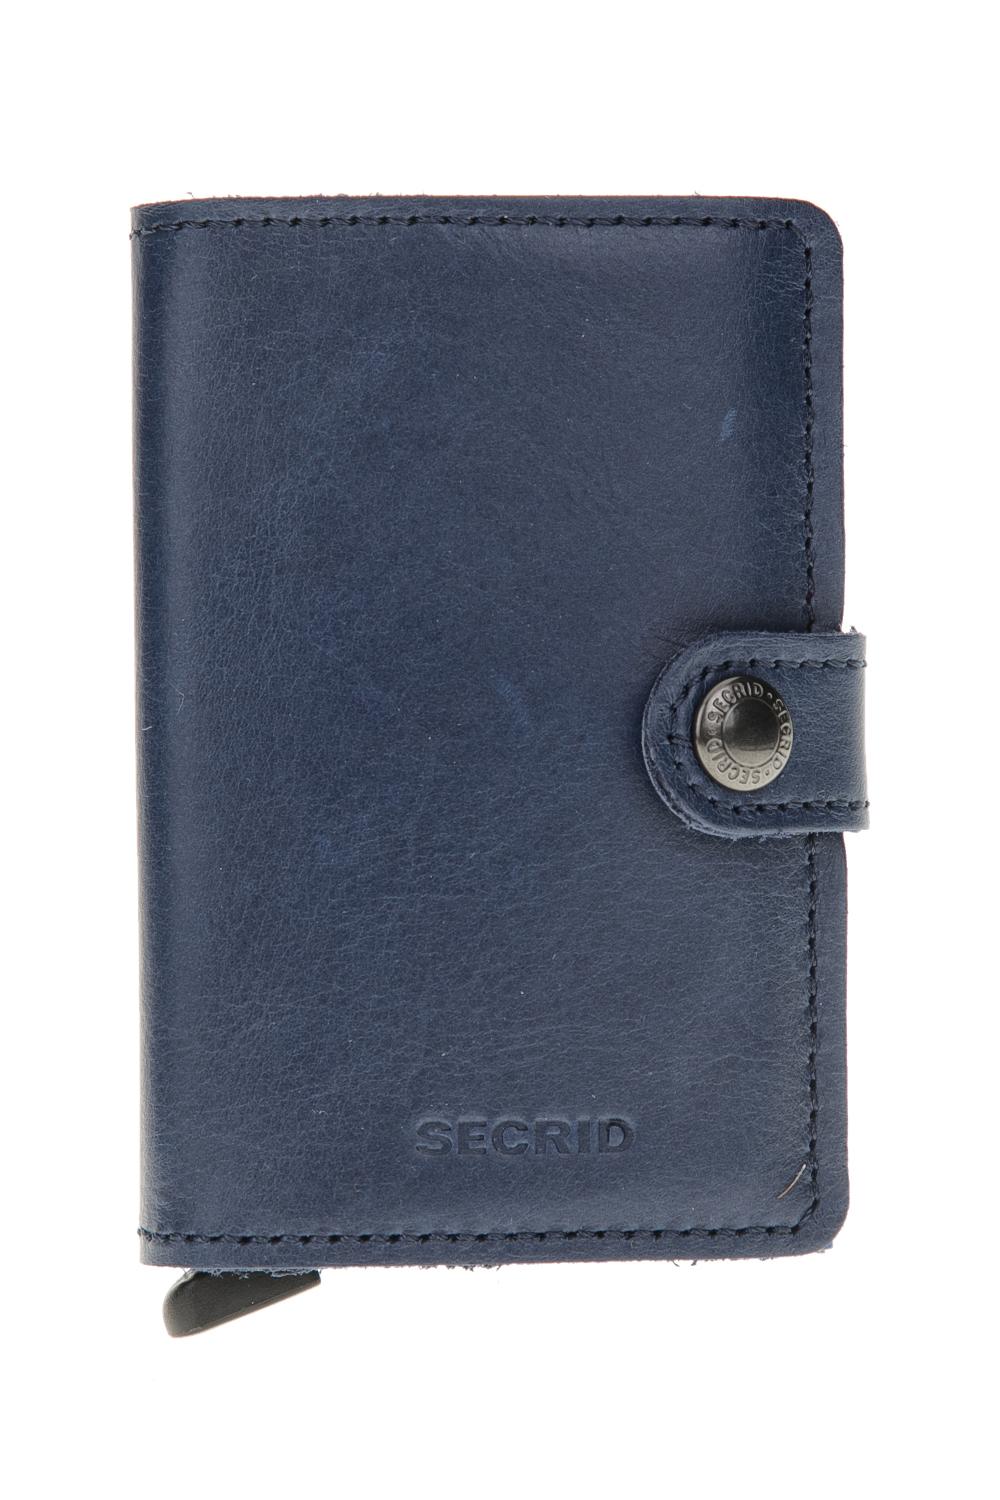 SECRID – Θήκη καρτών SECRID Miniwallet Original Navy μπλε 1675370.0-0011